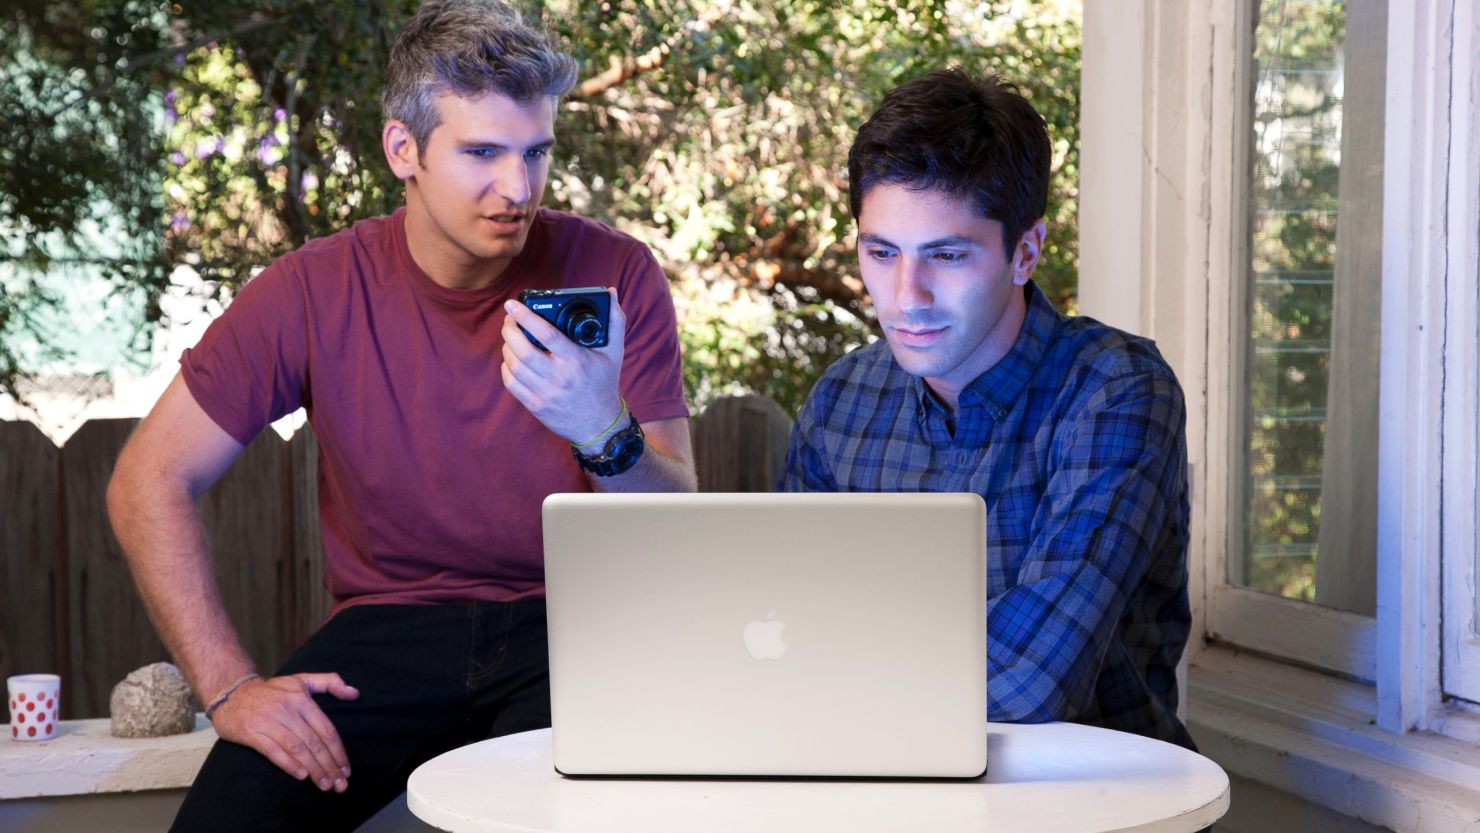 TV show 'Catfish' focuses on fake Internet relationships